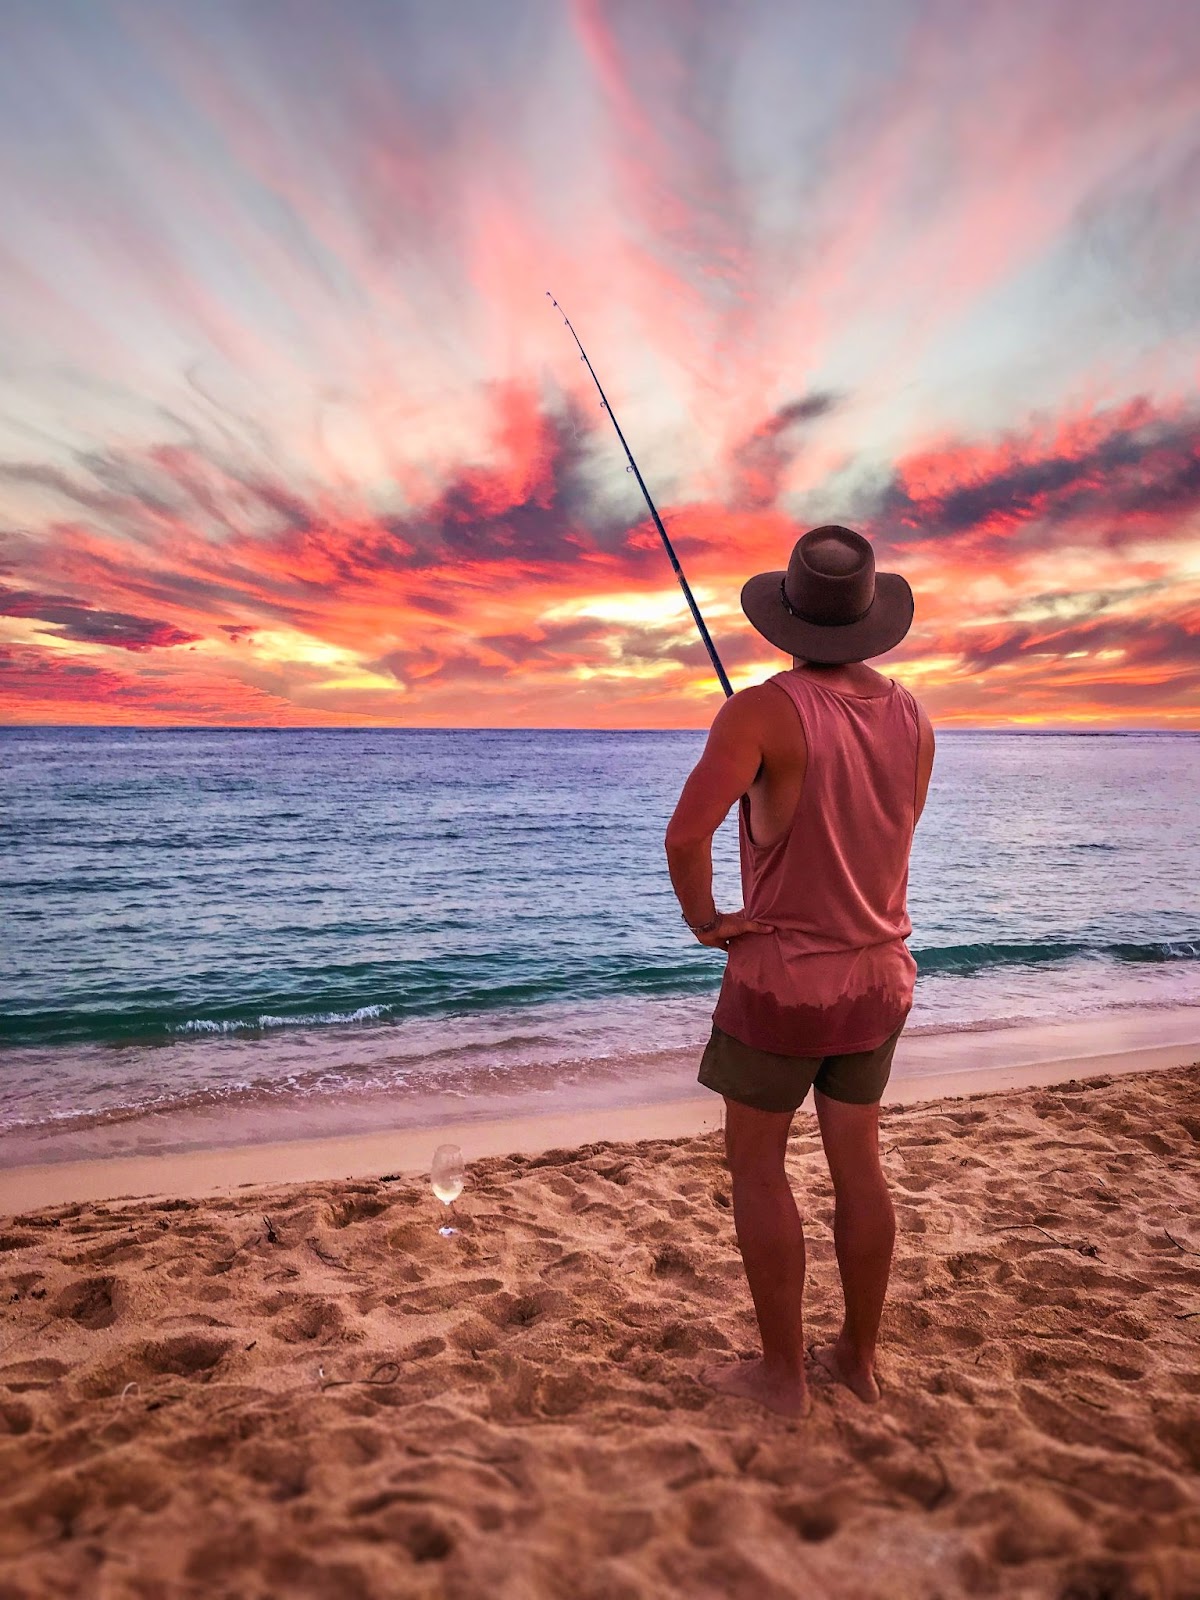 surf fishing sunset view